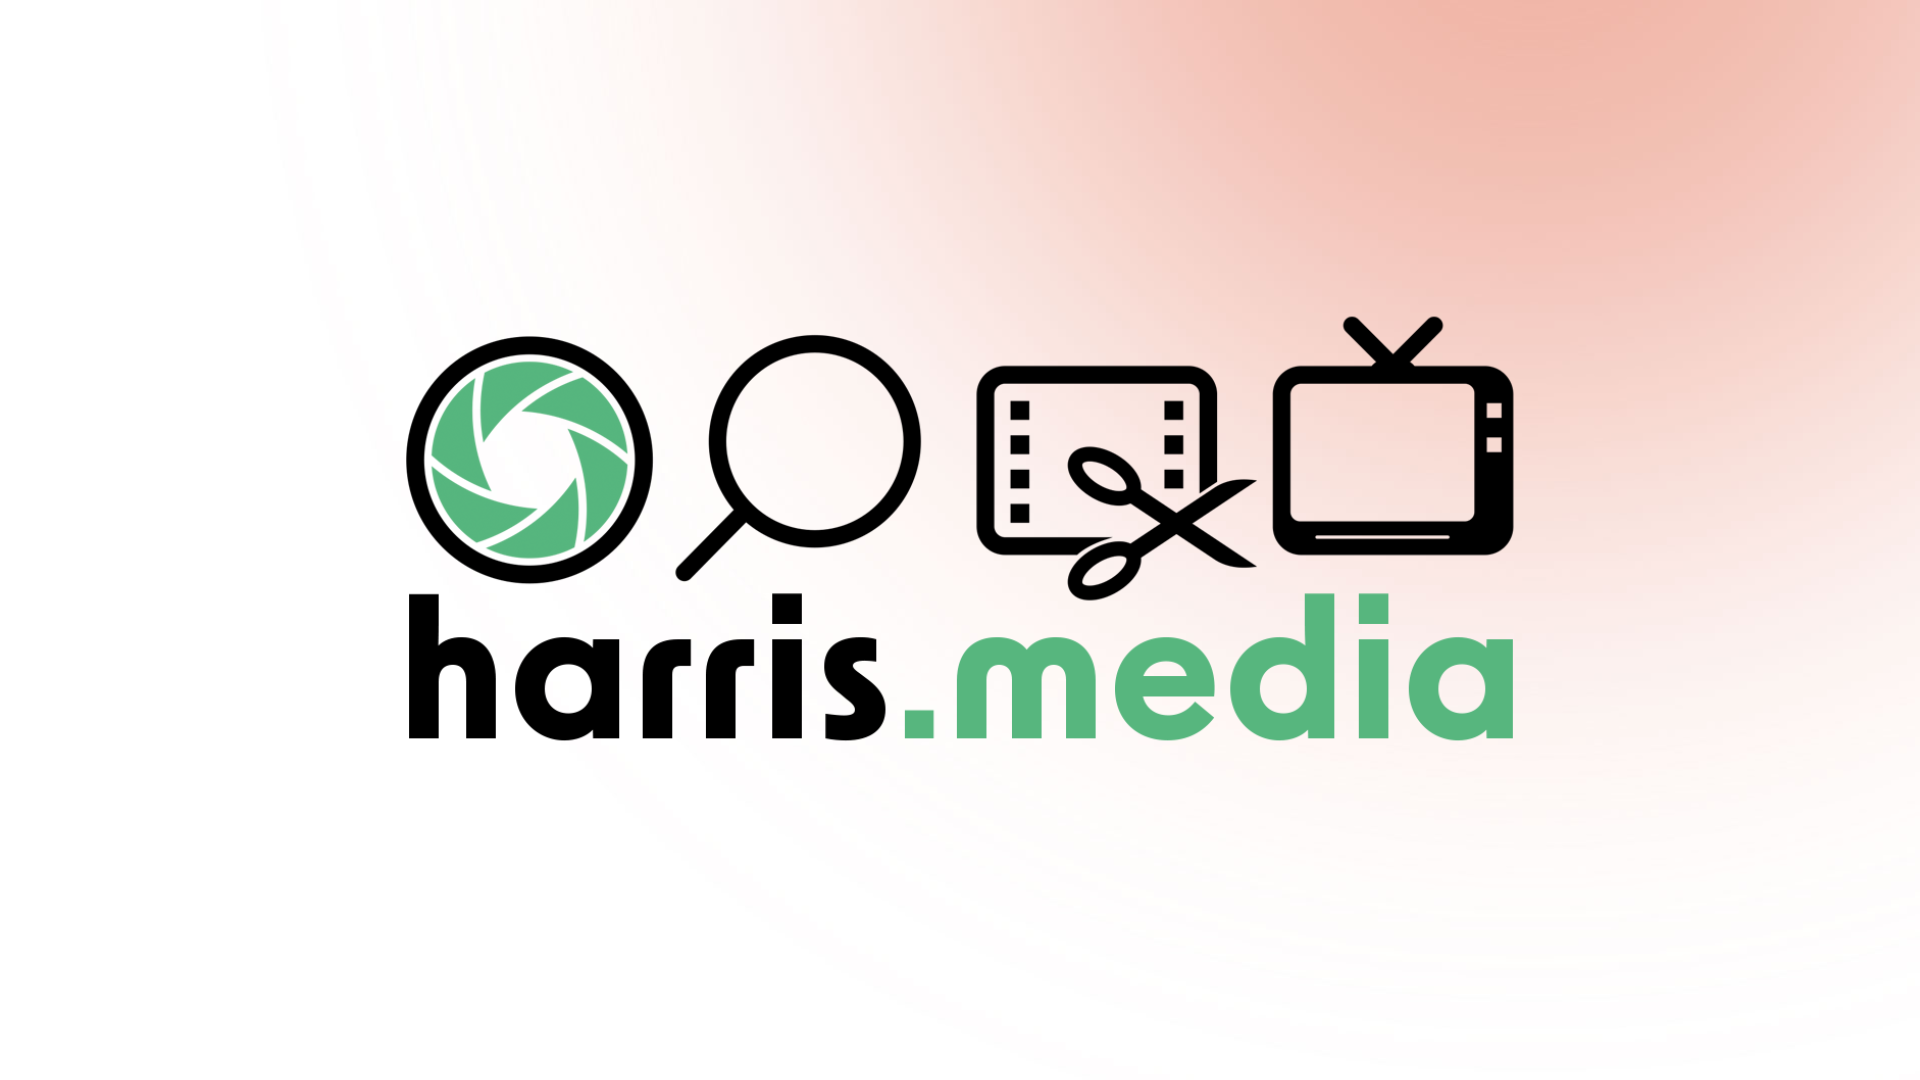 Harris media banner image